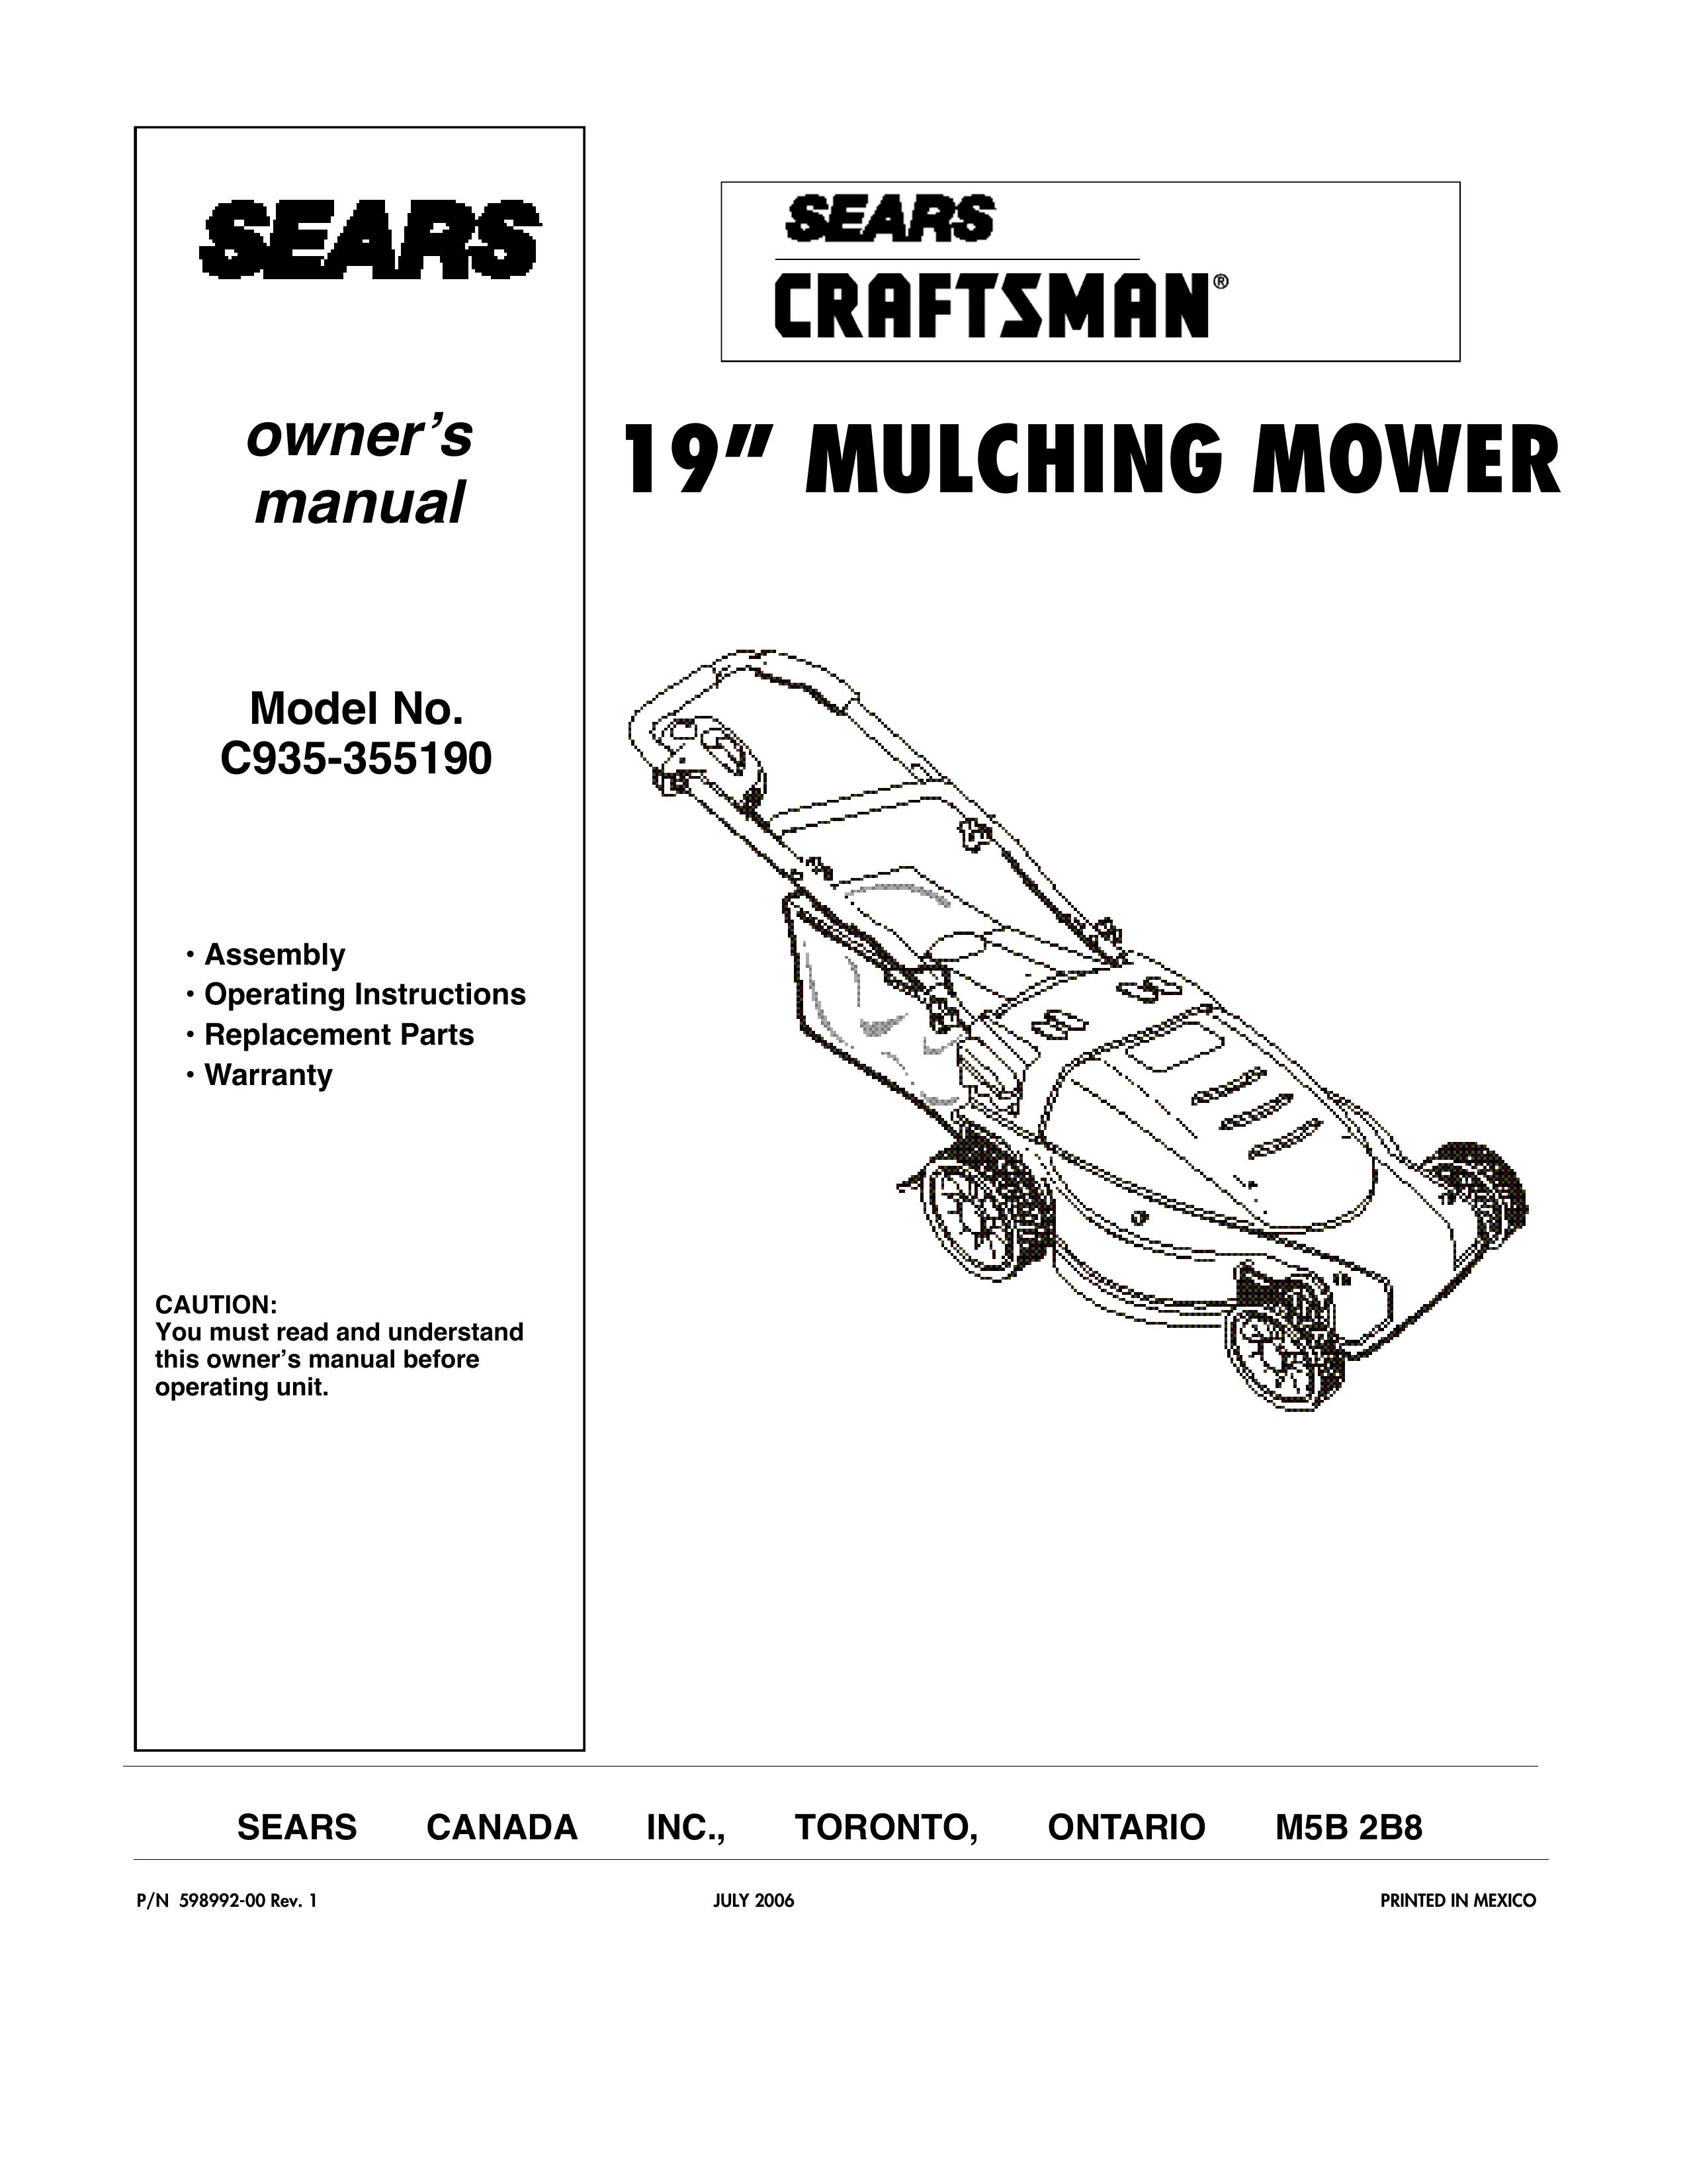 DeWalt C935-355190 Lawn Mower User Manual